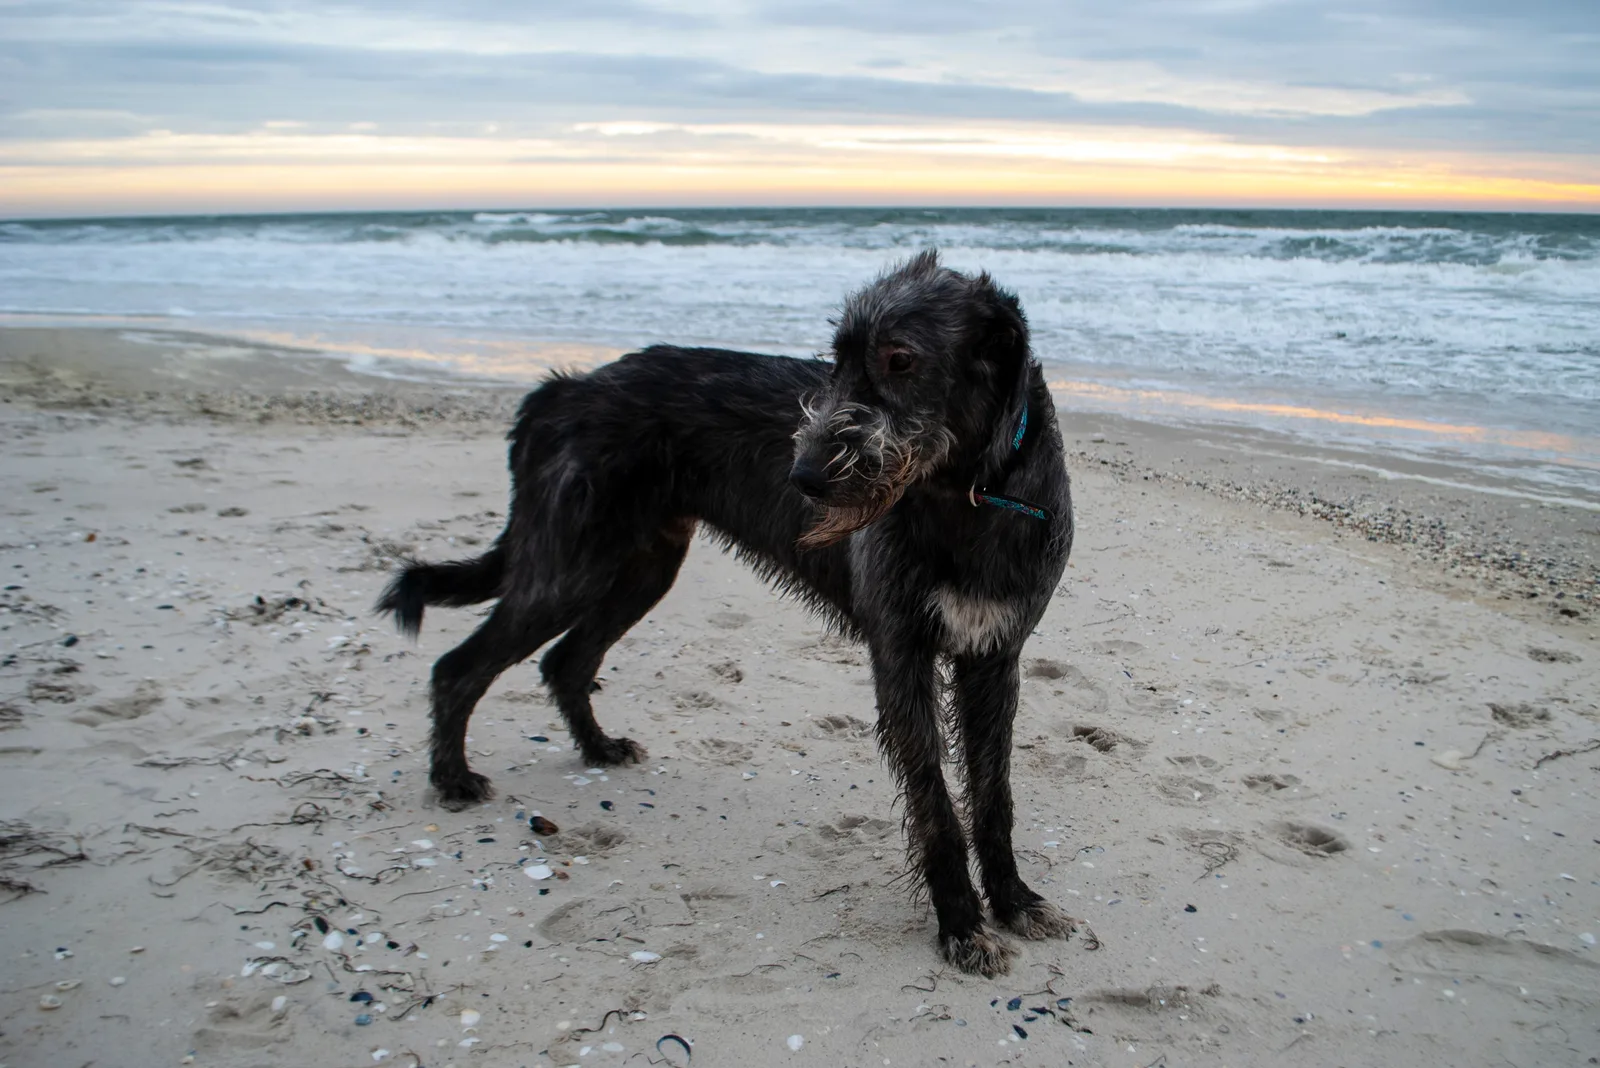 Weimardale dog standing on a sandy beach